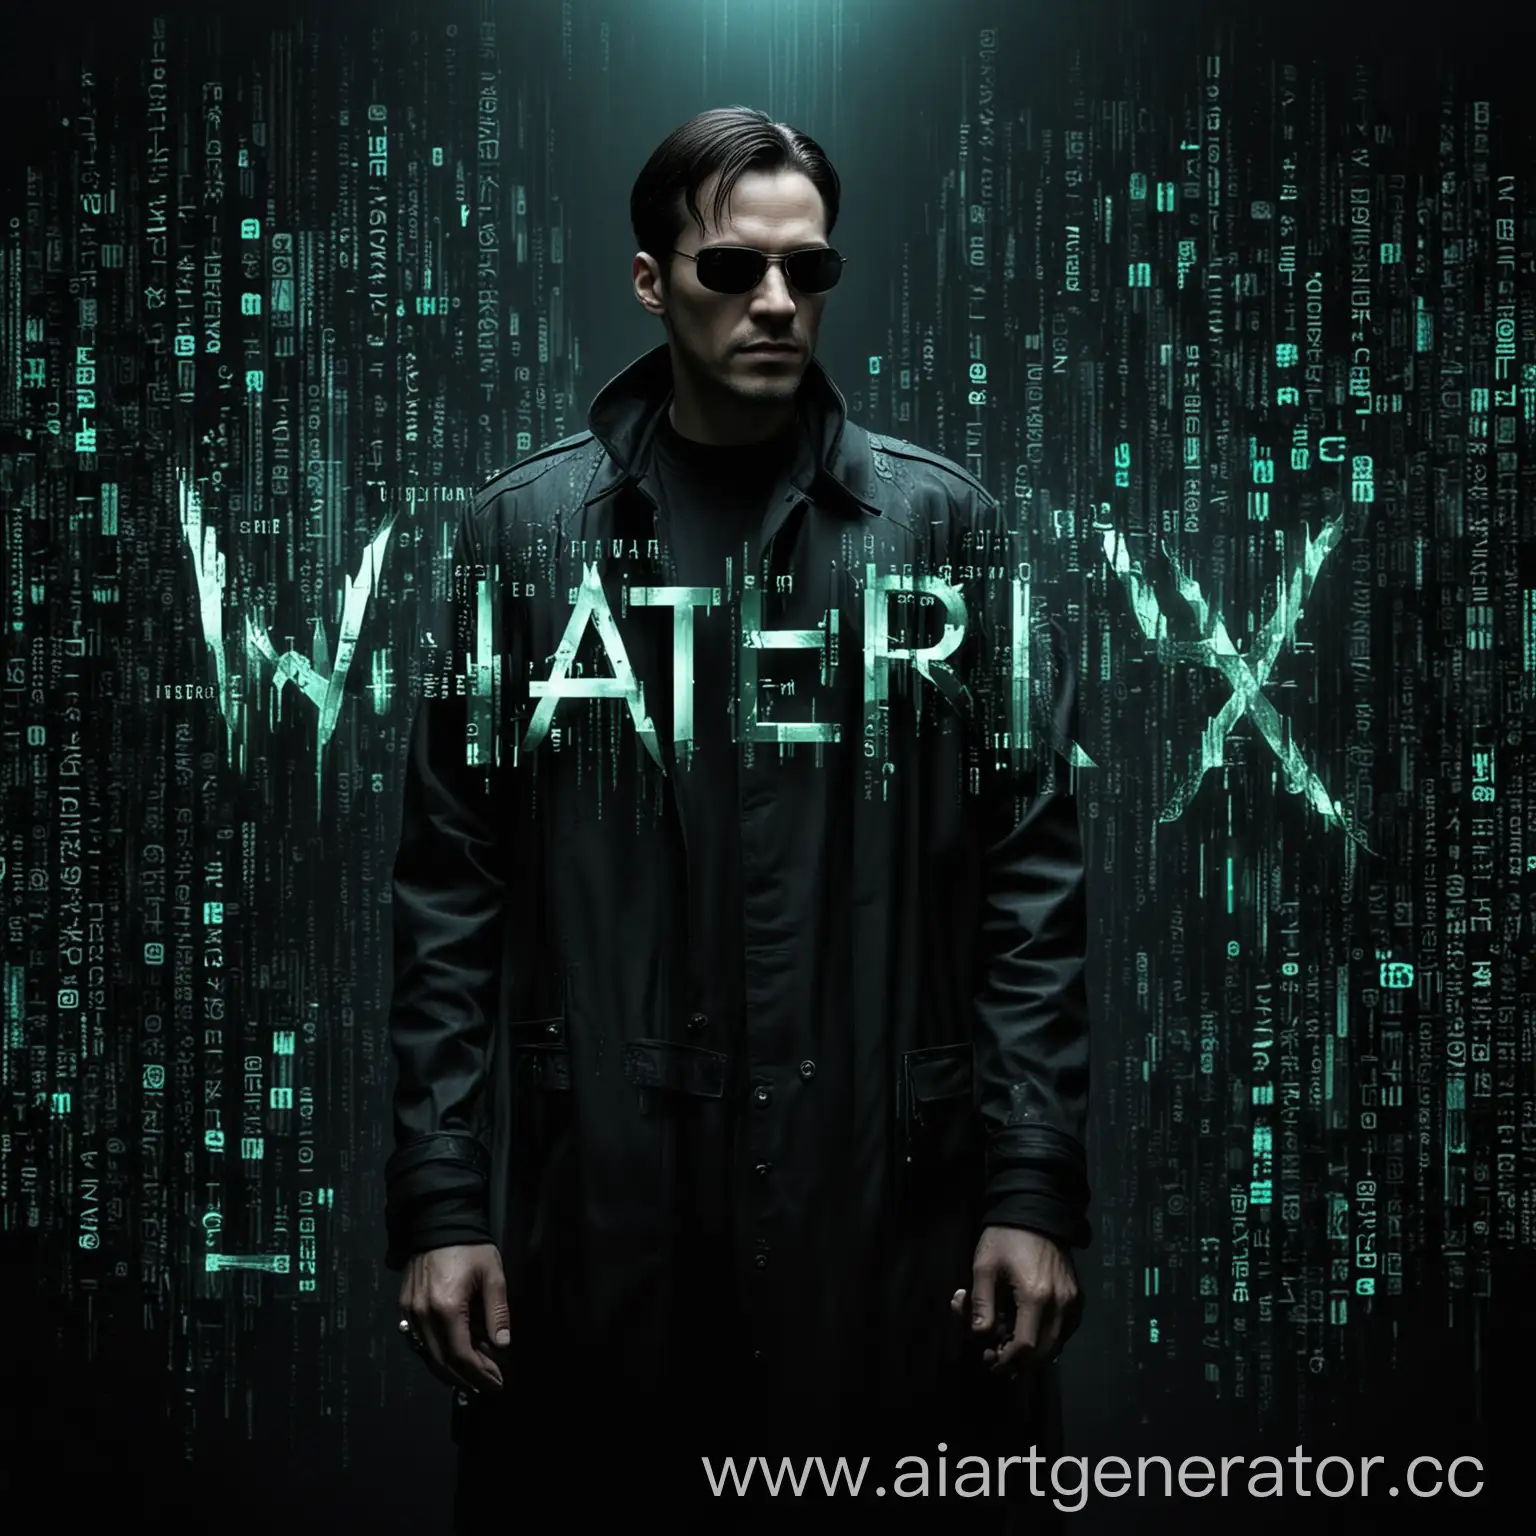 Cyberpunk-Matrix-Style-Portrait-Walter-Dag-Typography-Art